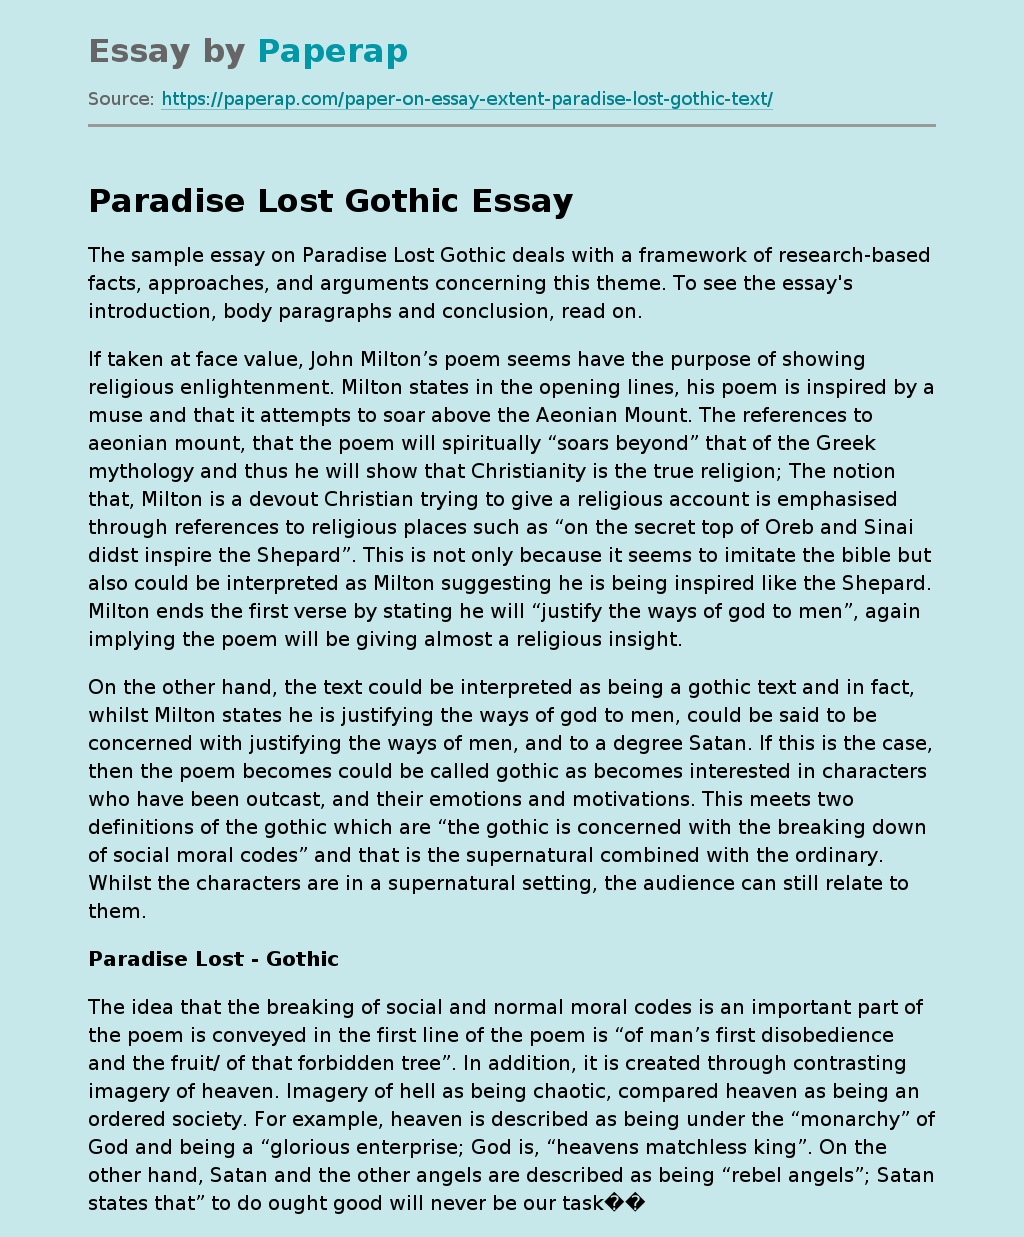 "Paradise Lost" - Gothic